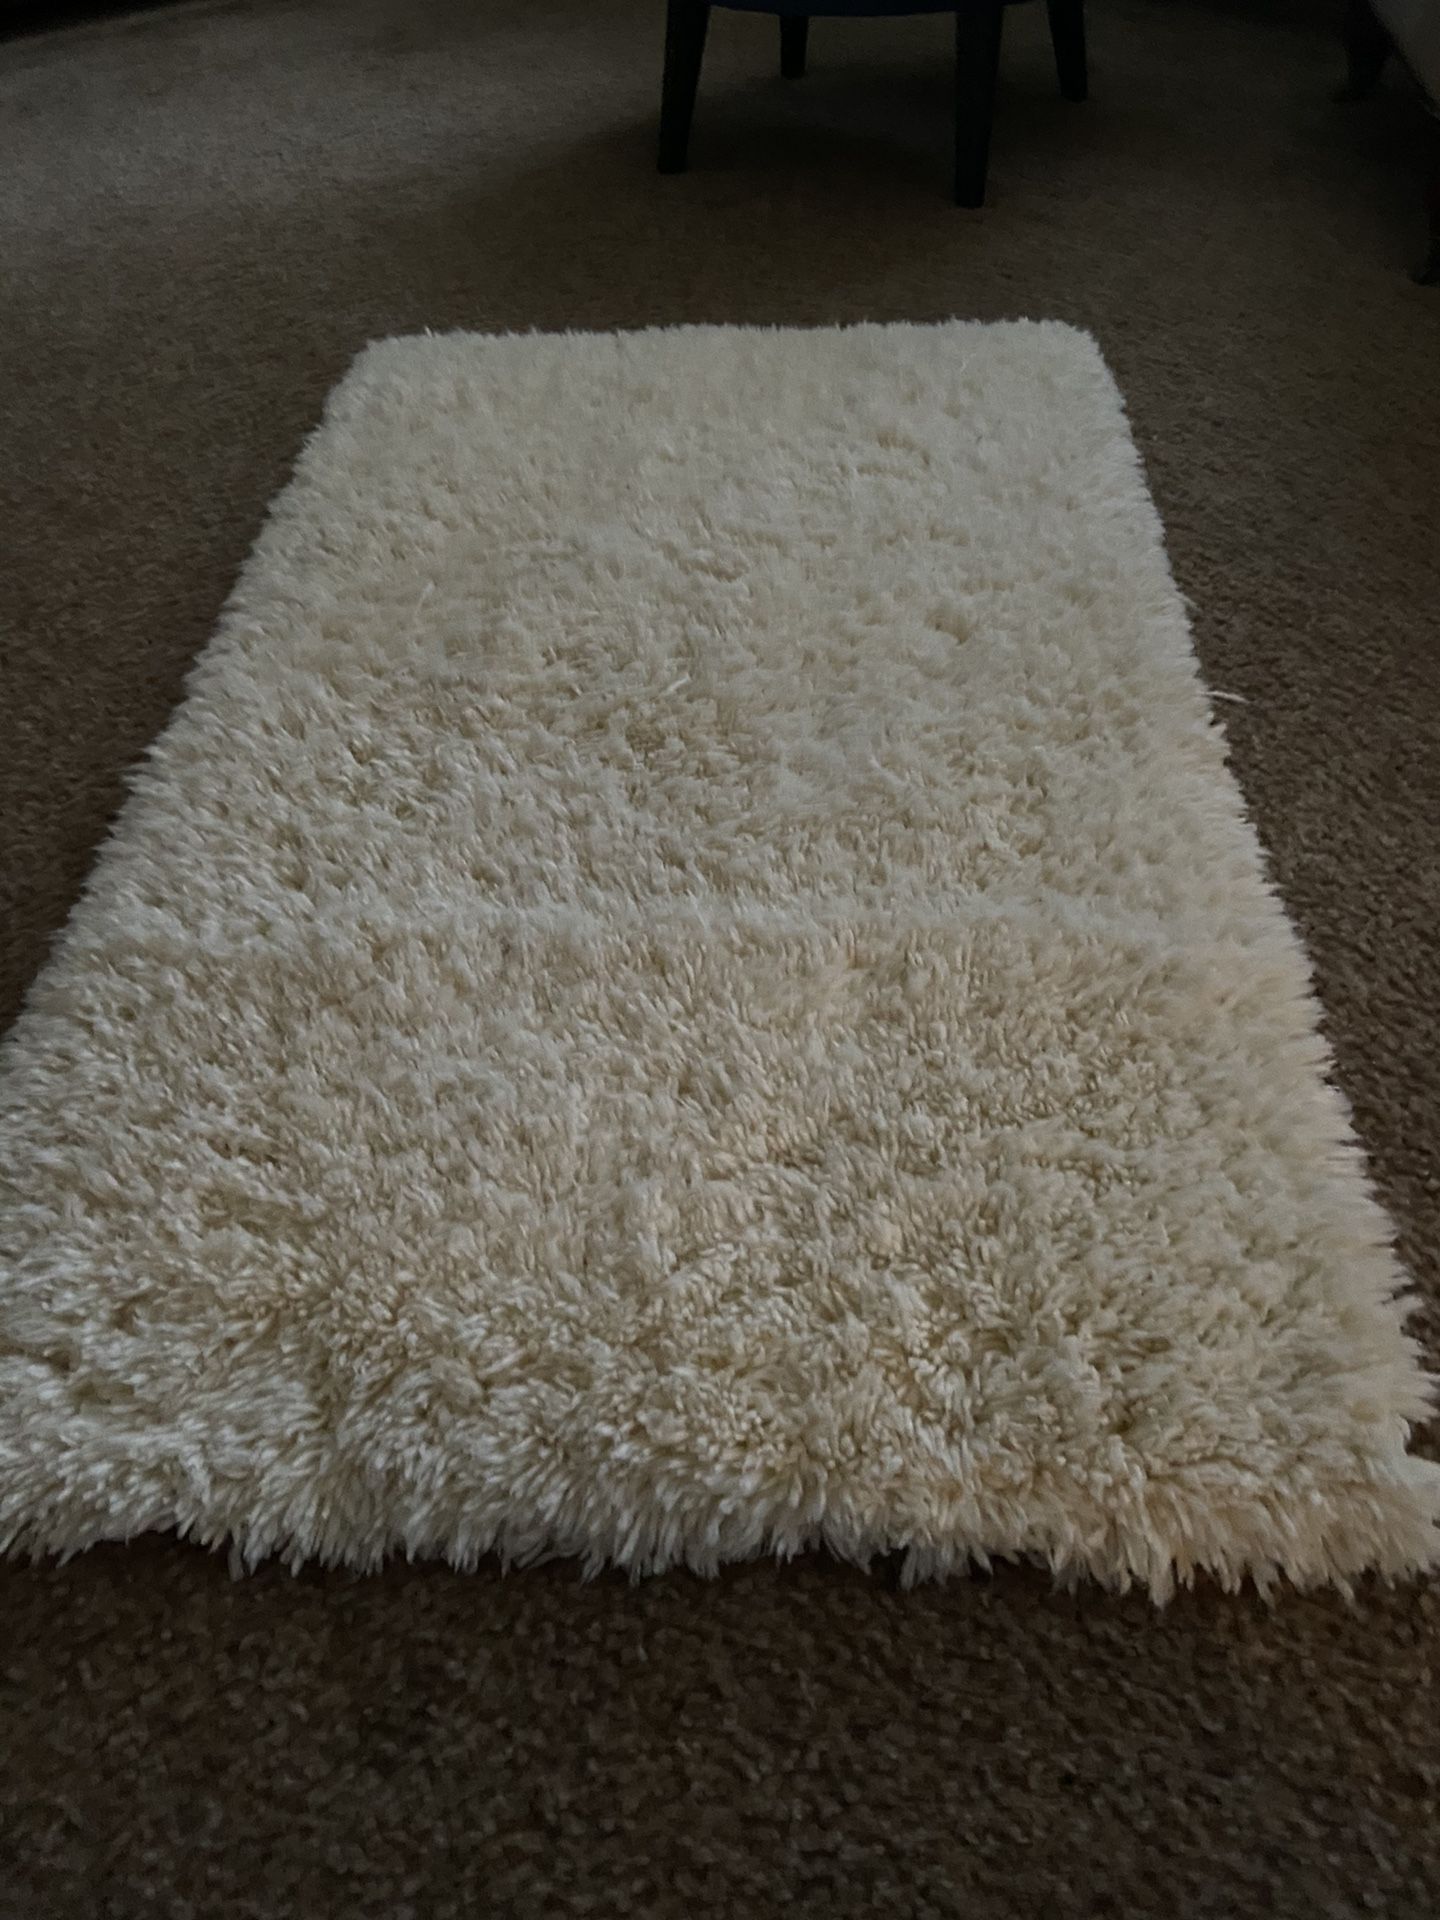 Ivory colored soft furry rug